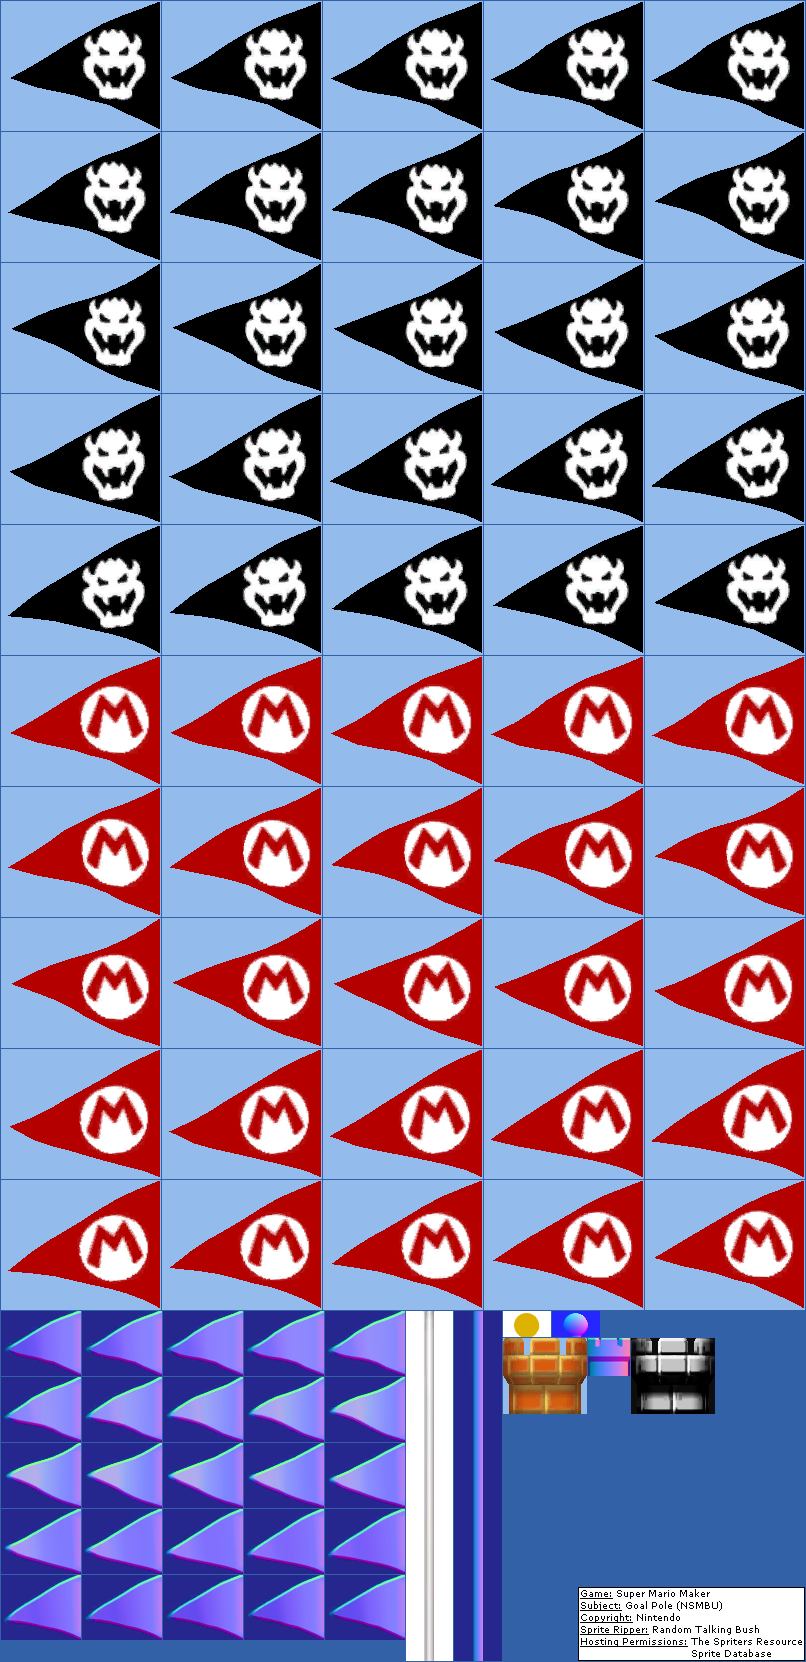 Super Mario Maker - Goal Pole (NSMBU)